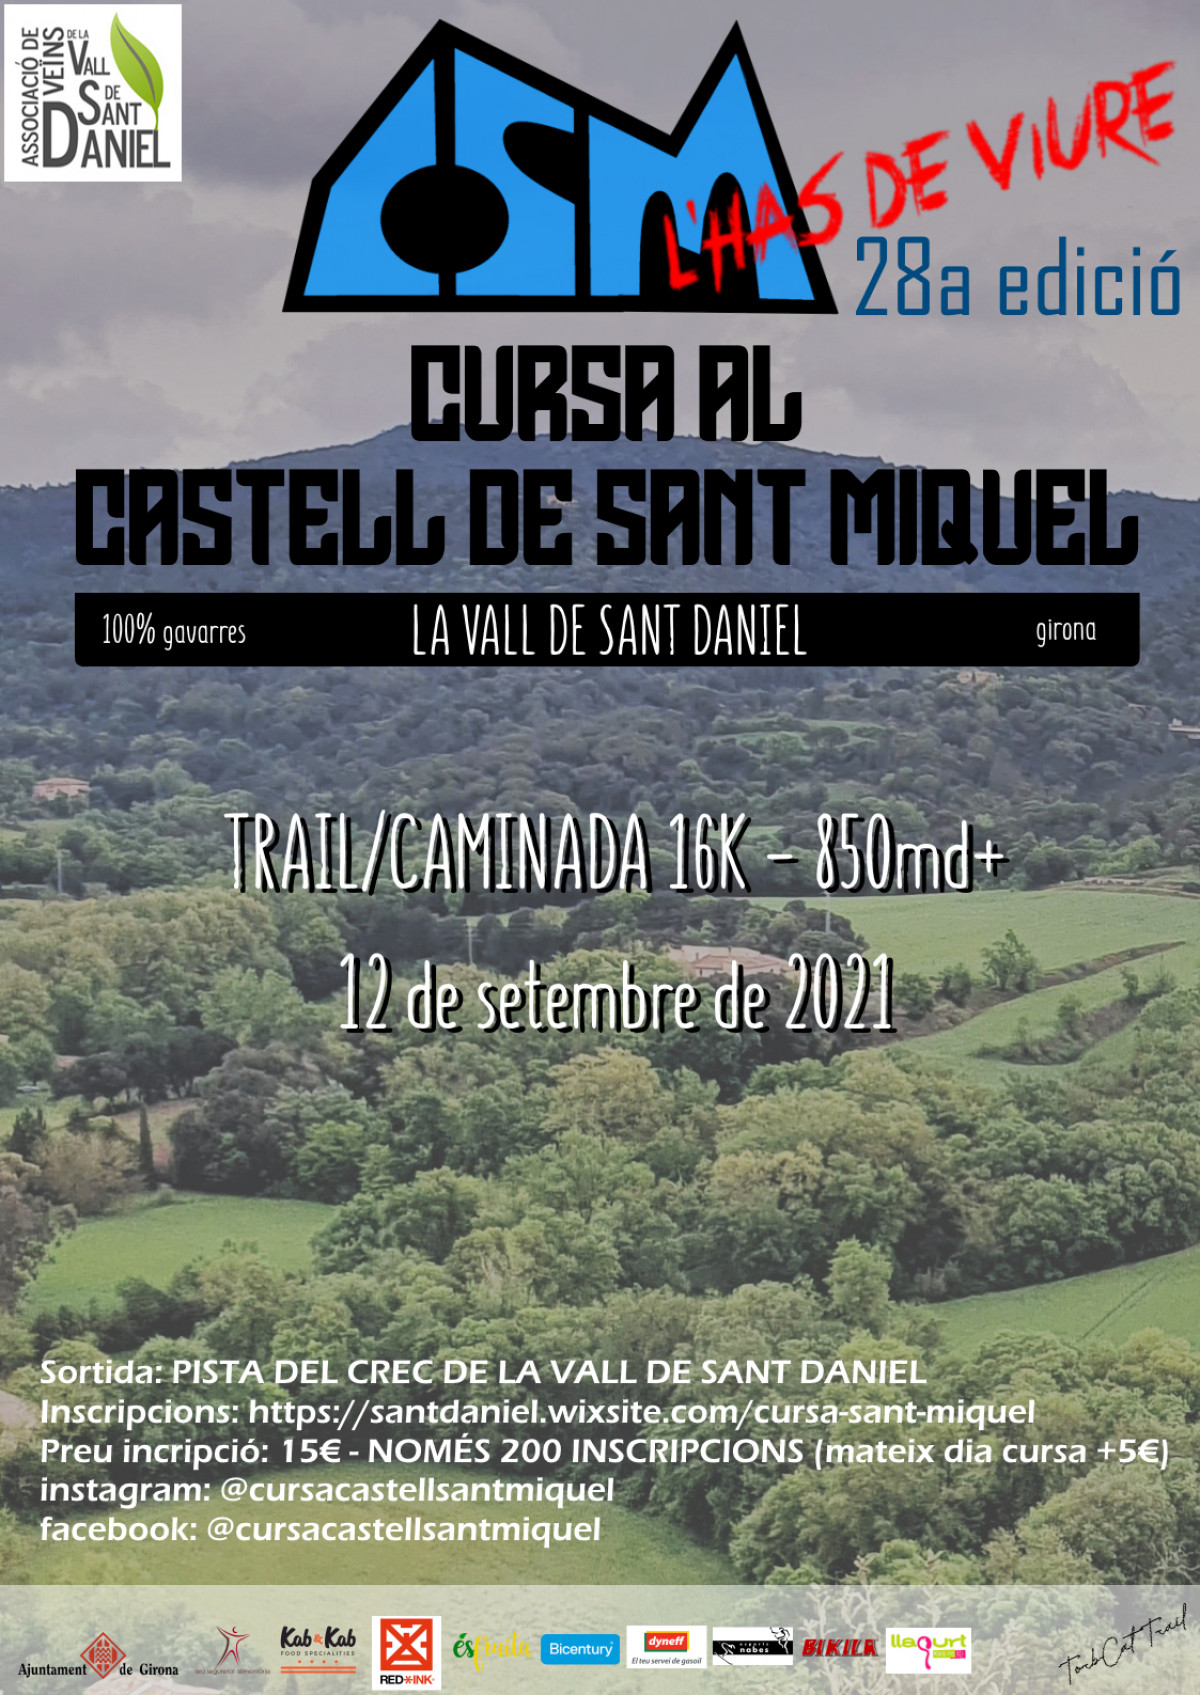 28a CURSA AL CASTELL DE SANT MIQUEL